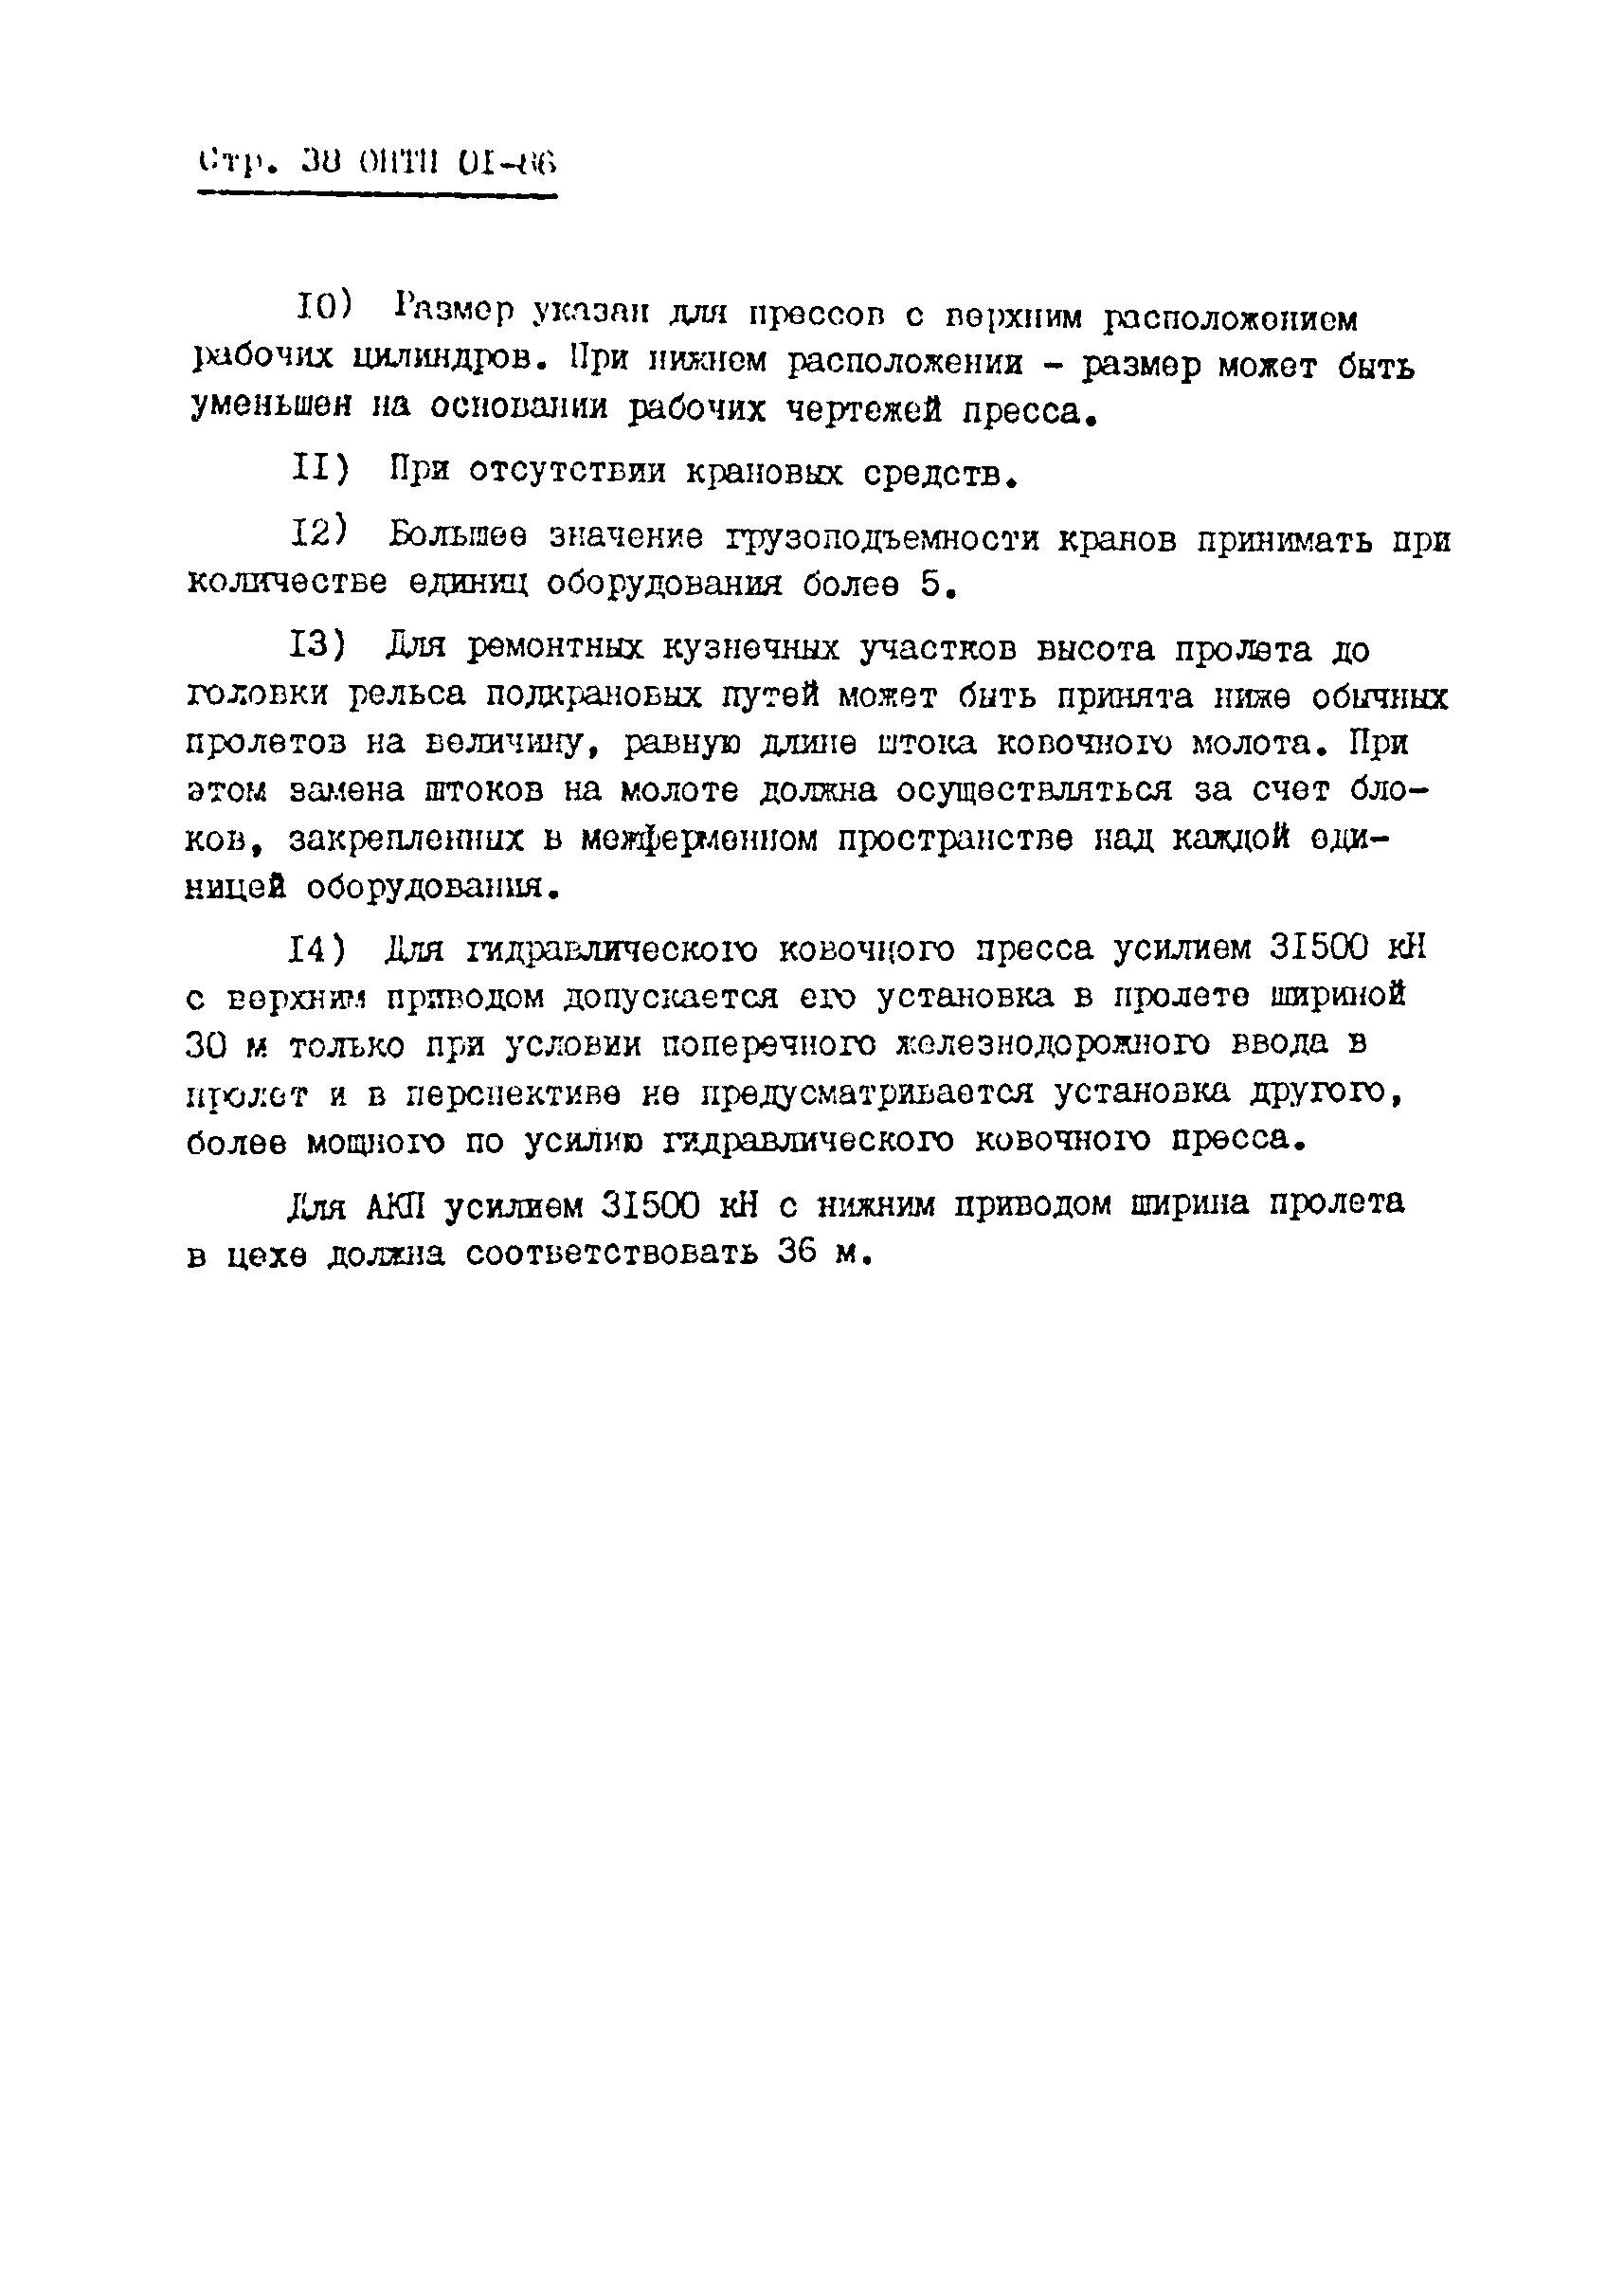 ОНТП 01-86/Минавтопром